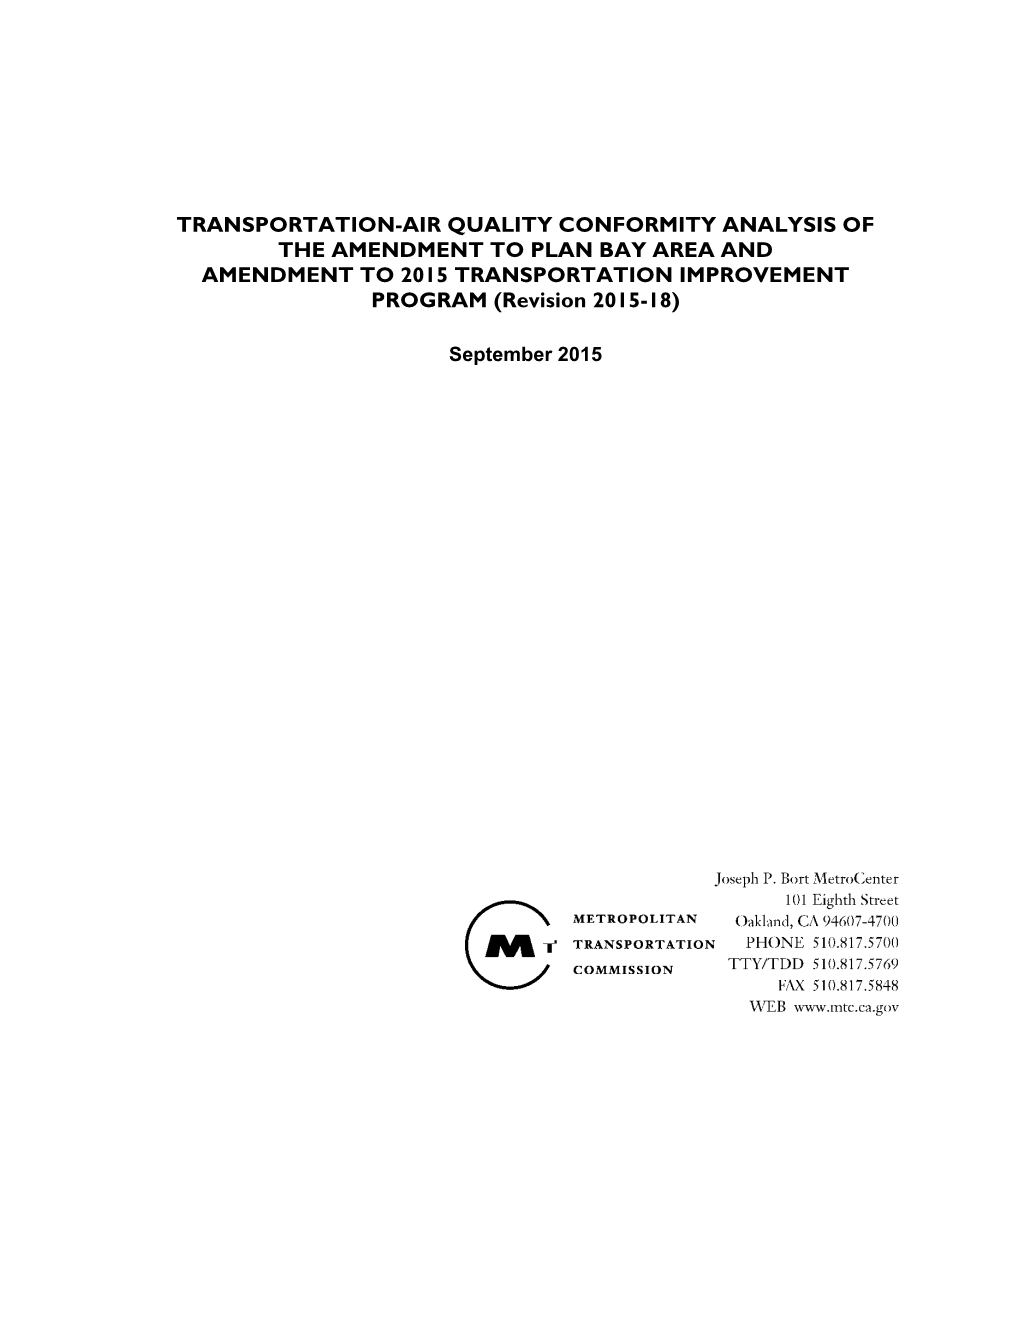 TRANSPORTATION-AIR QUALITY CONFORMITY ANALYSIS of the AMENDMENT to PLAN BAY AREA and AMENDMENT to 2015 TRANSPORTATION IMPROVEMENT PROGRAM (Revision 2015-18)